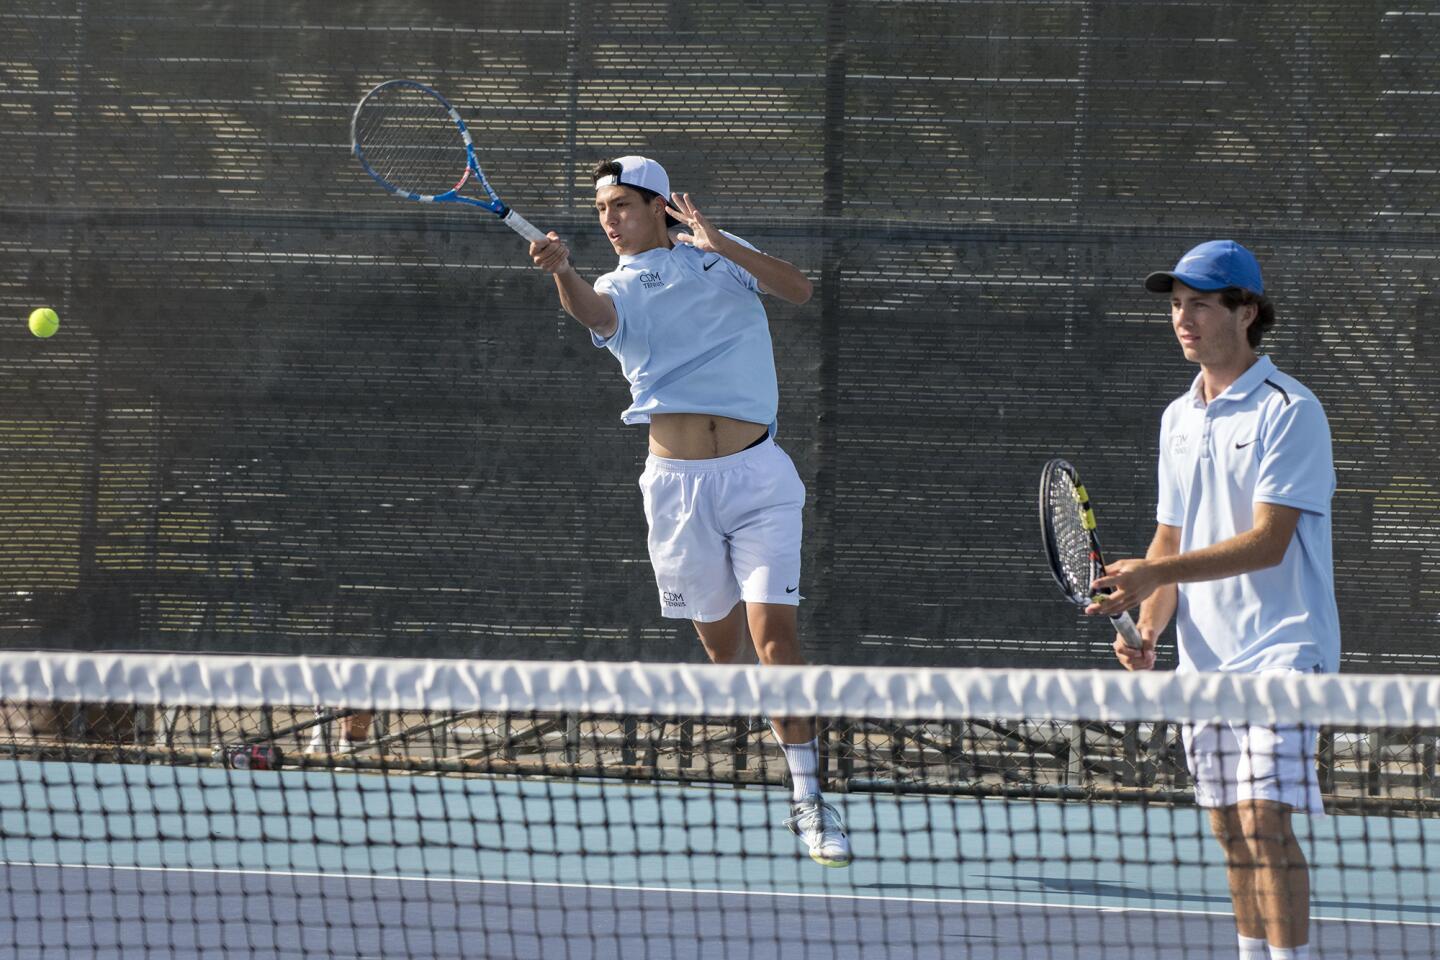 Corona del Mar vs. Sage Hill in a boys' tennis match